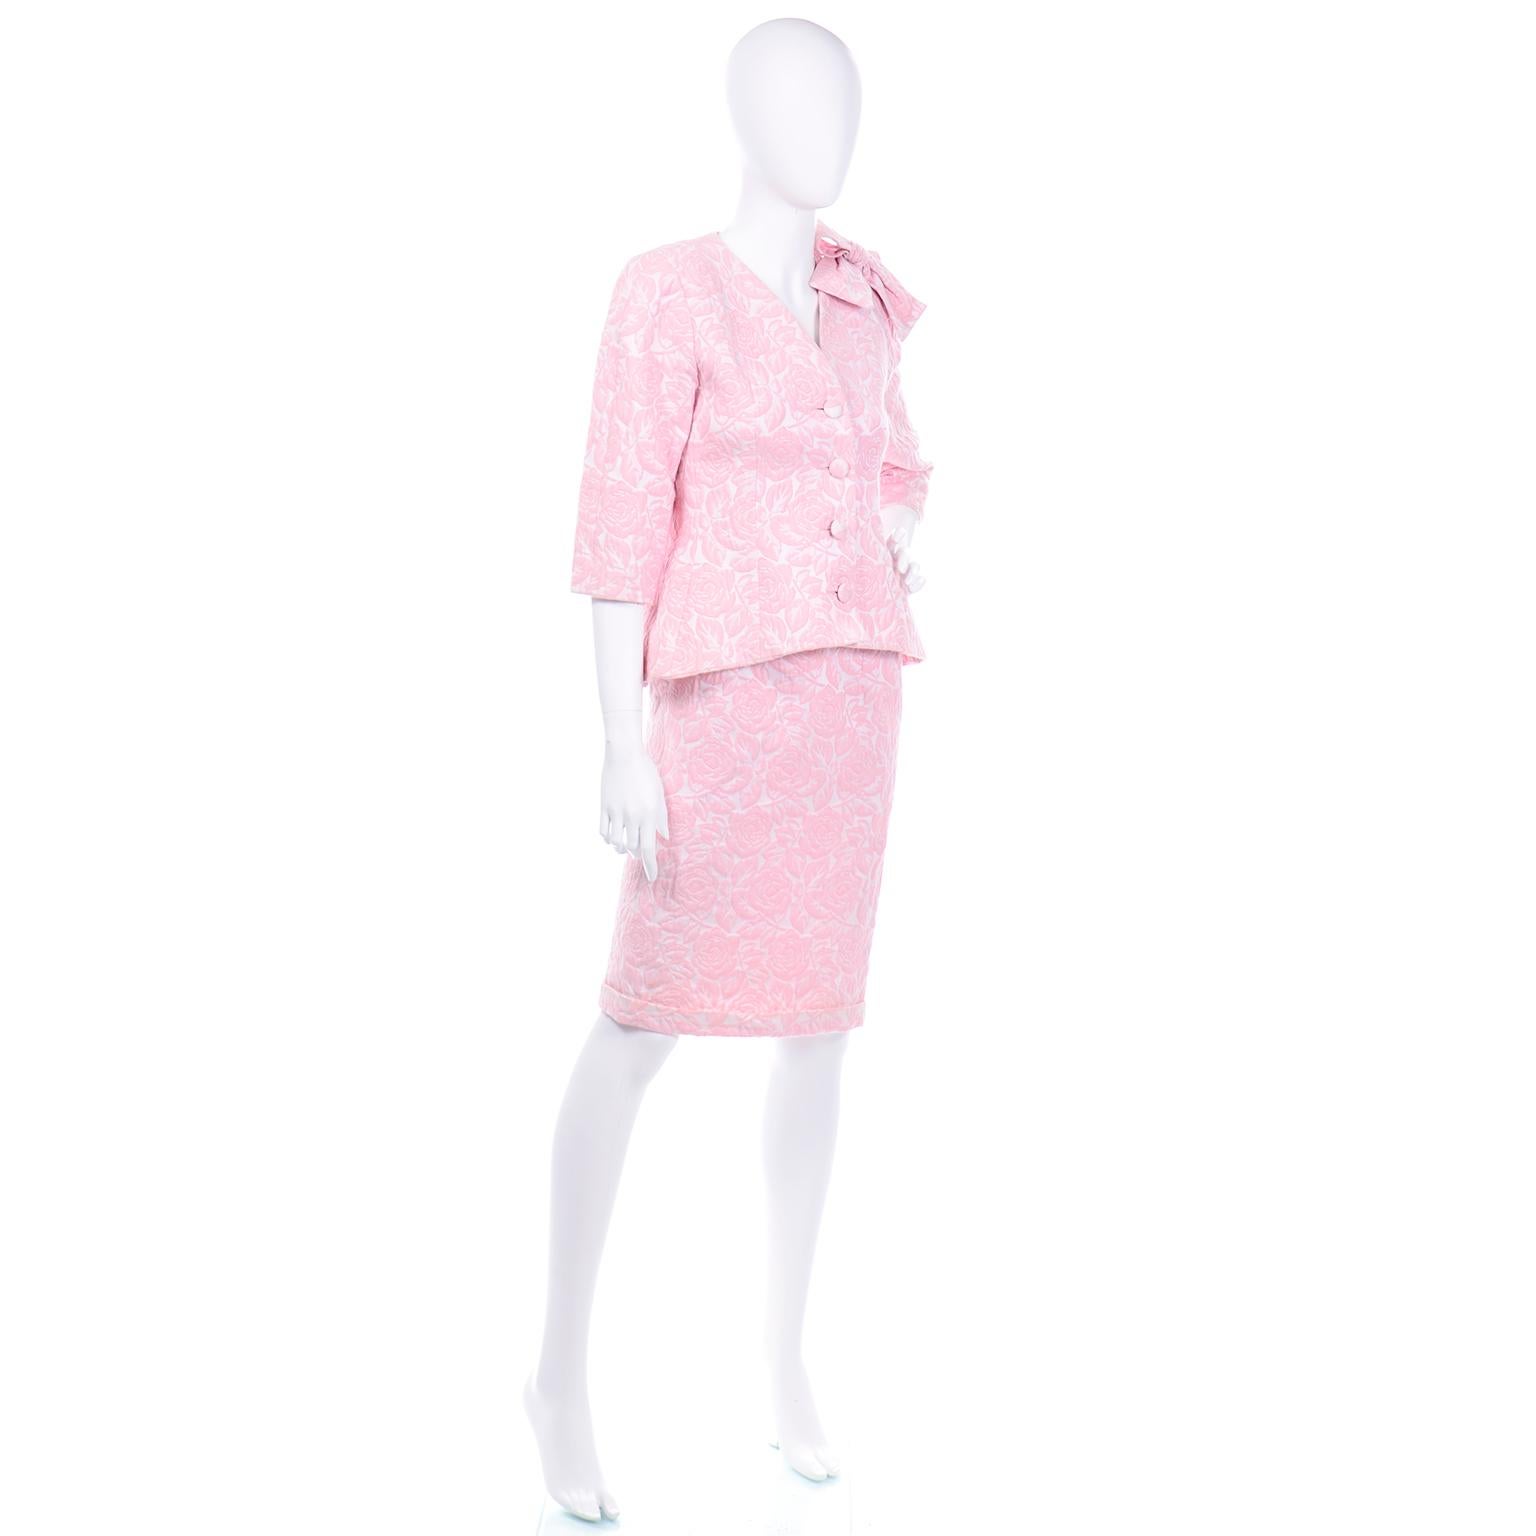 vintage pink suit